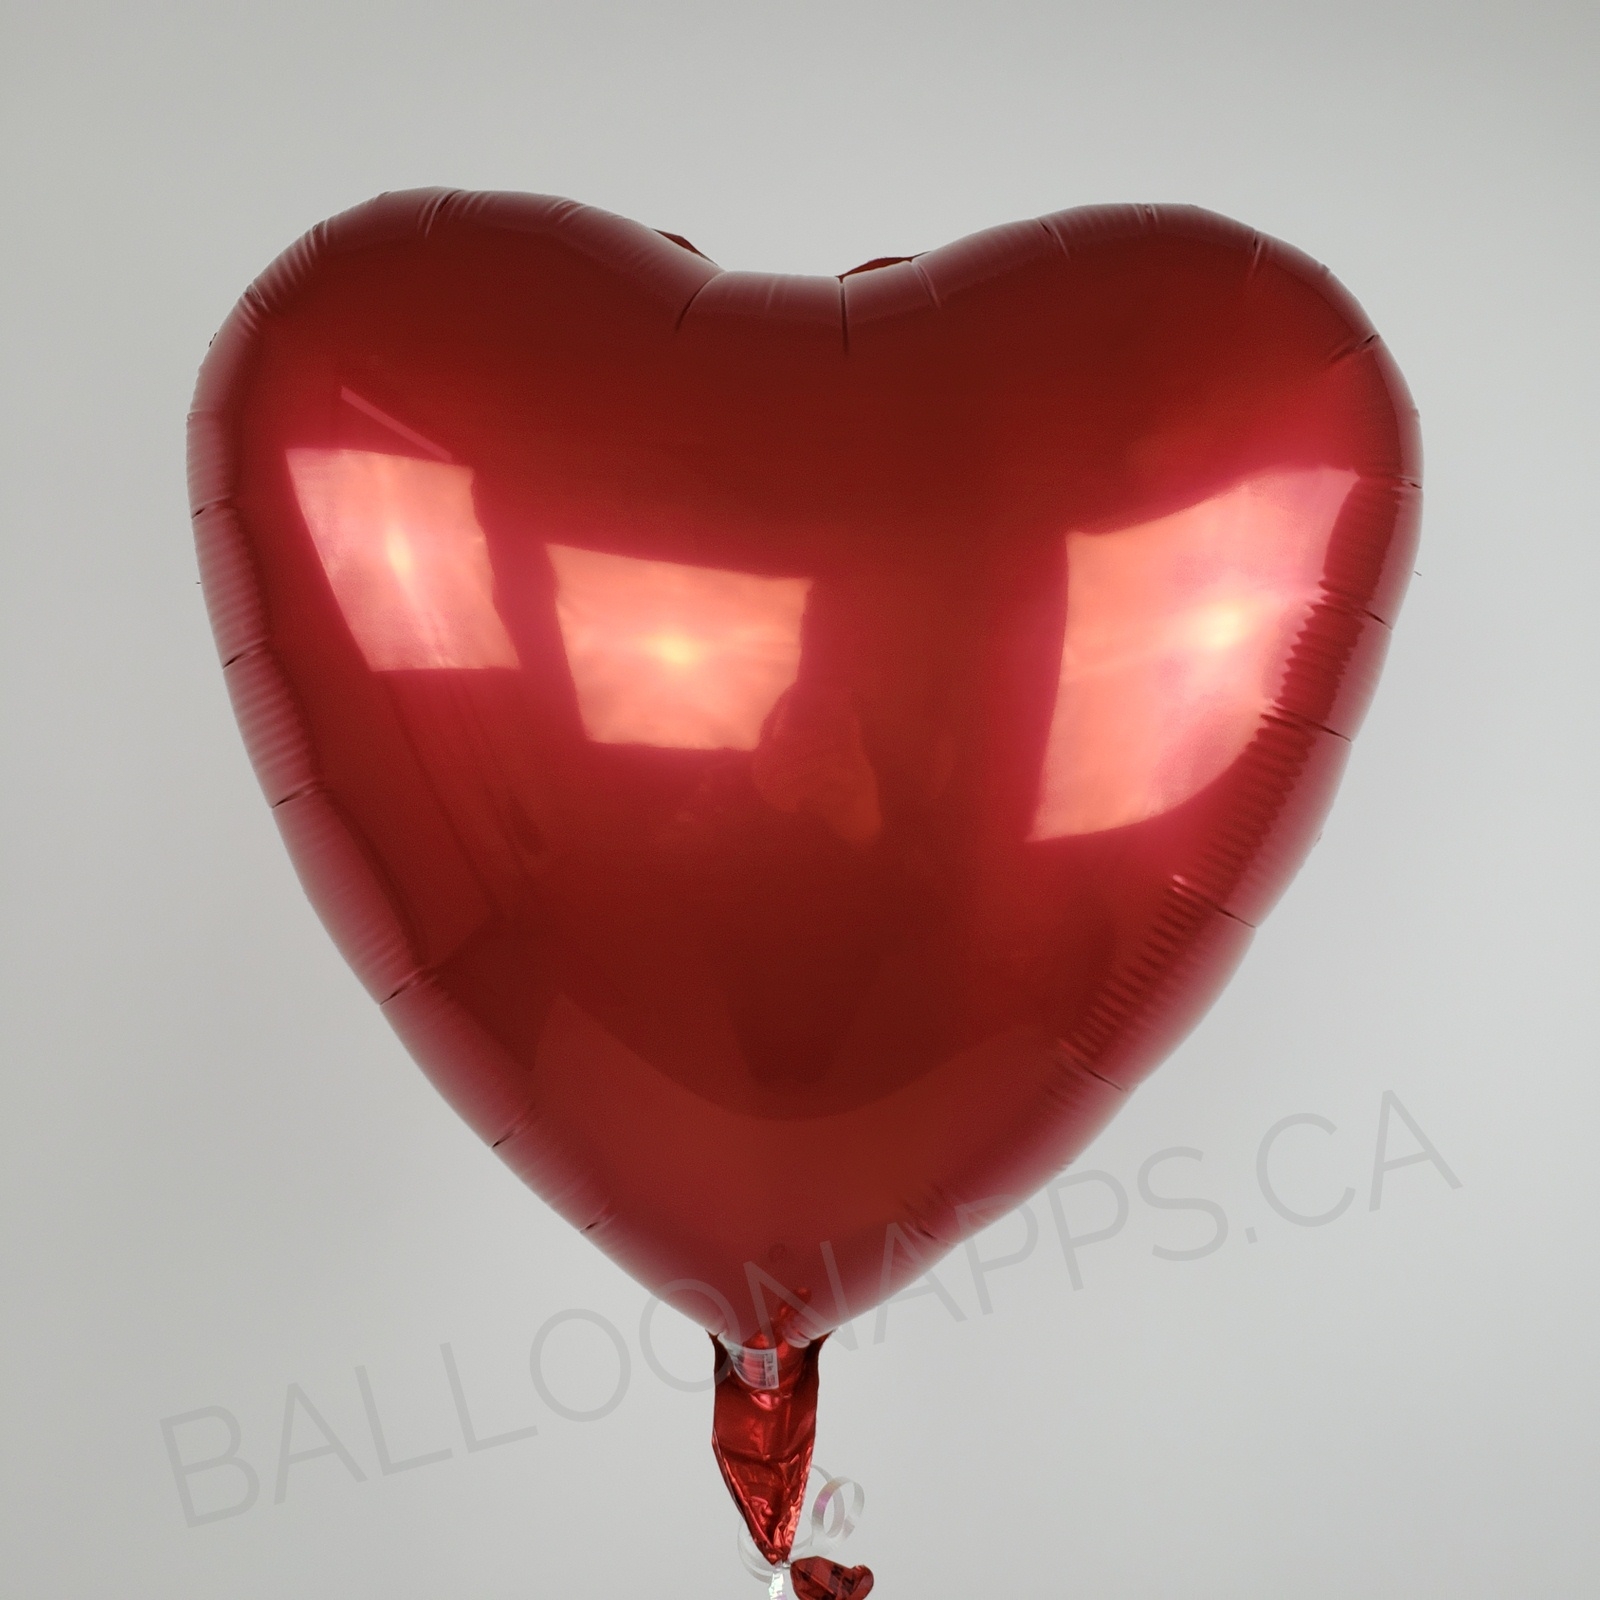 Metallic Red Foil Balloon 18, Anagram 10584 Heart 